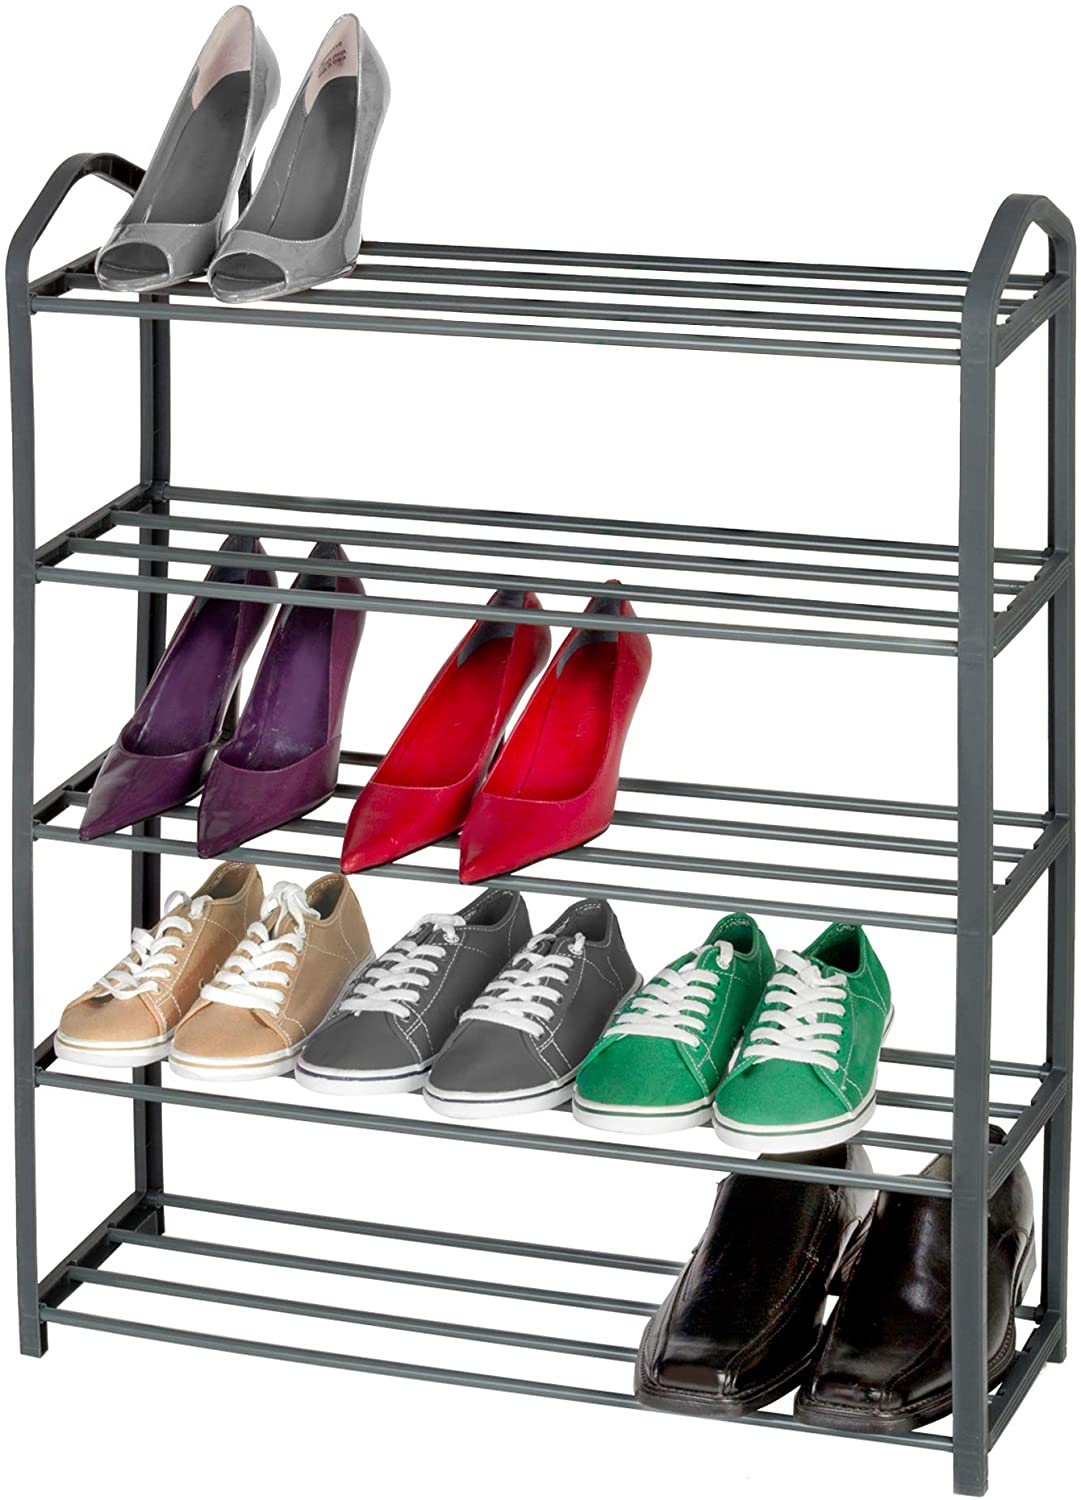 Dsermall 7 Tiers Plus 5 Tiers Shoe Rack Metal Shoe Storage Shelf